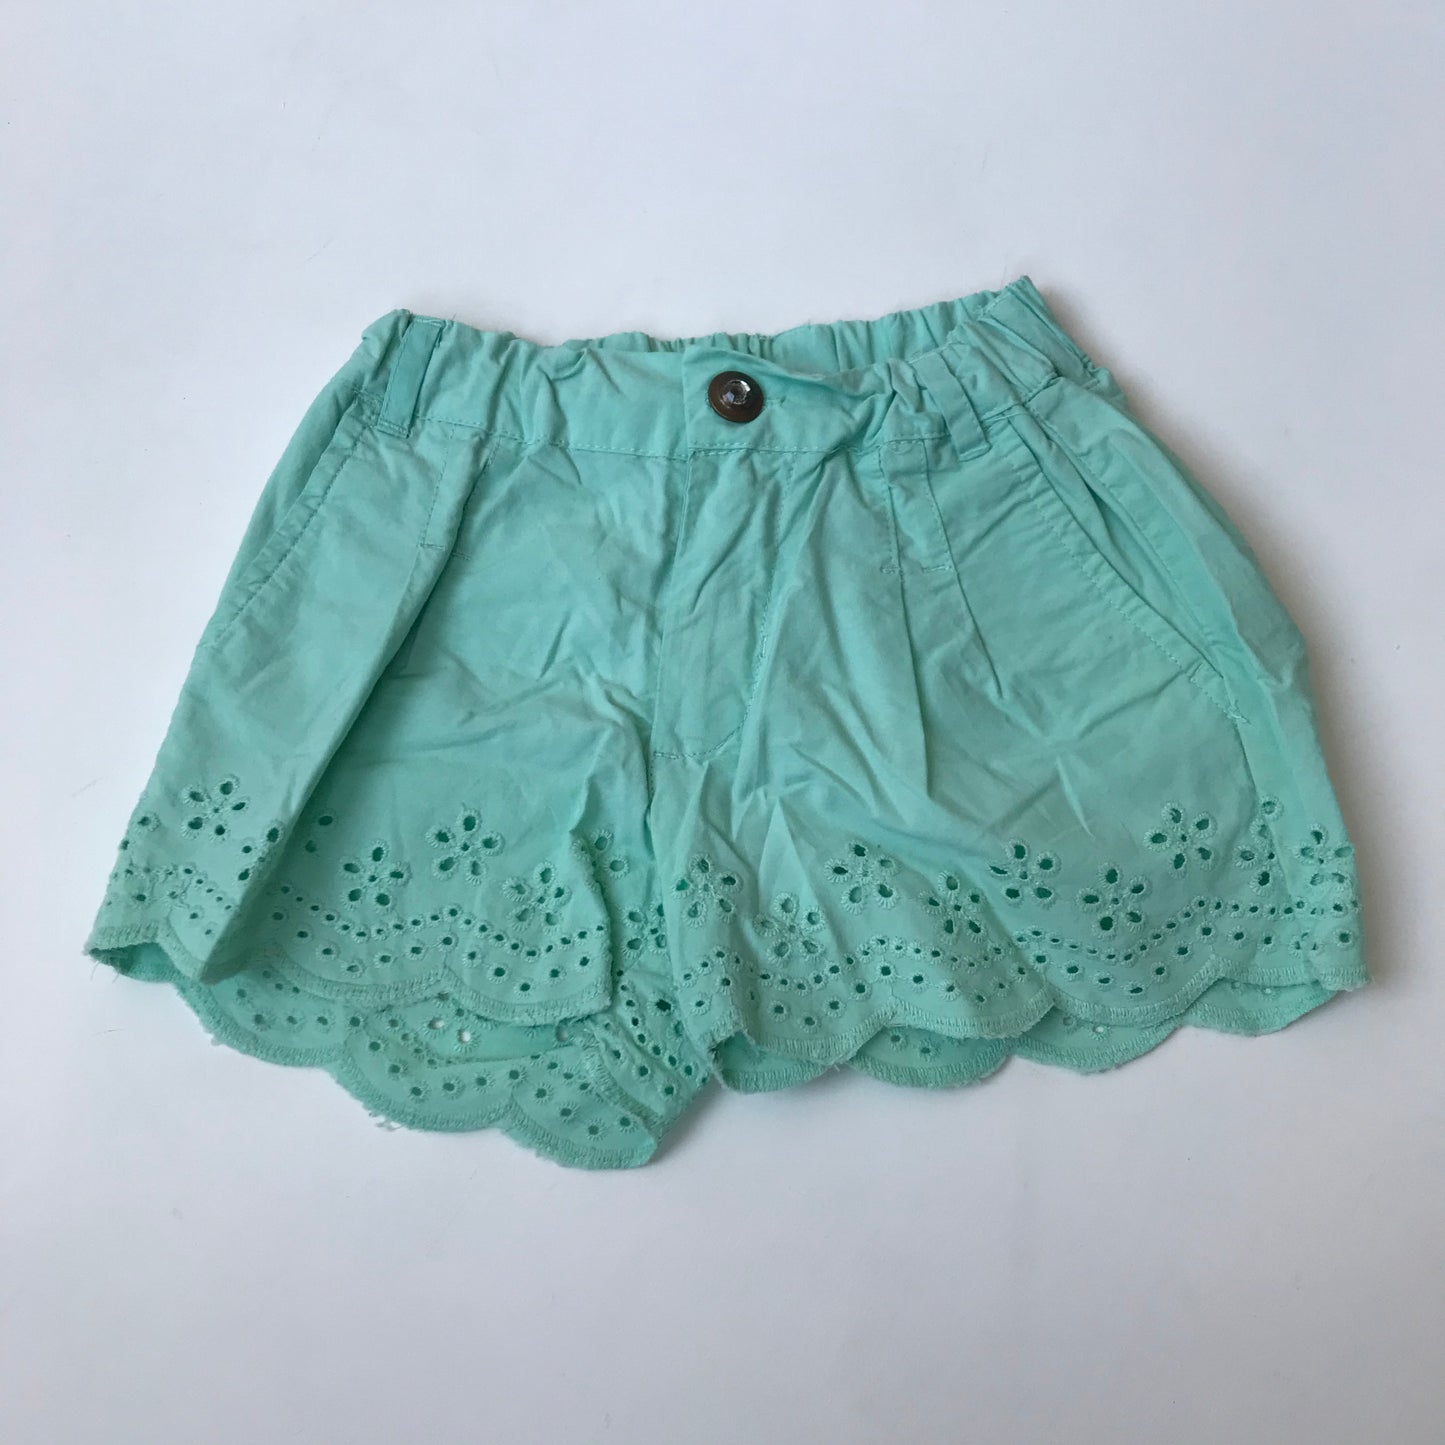 Shorts - Mint Green - Age 5